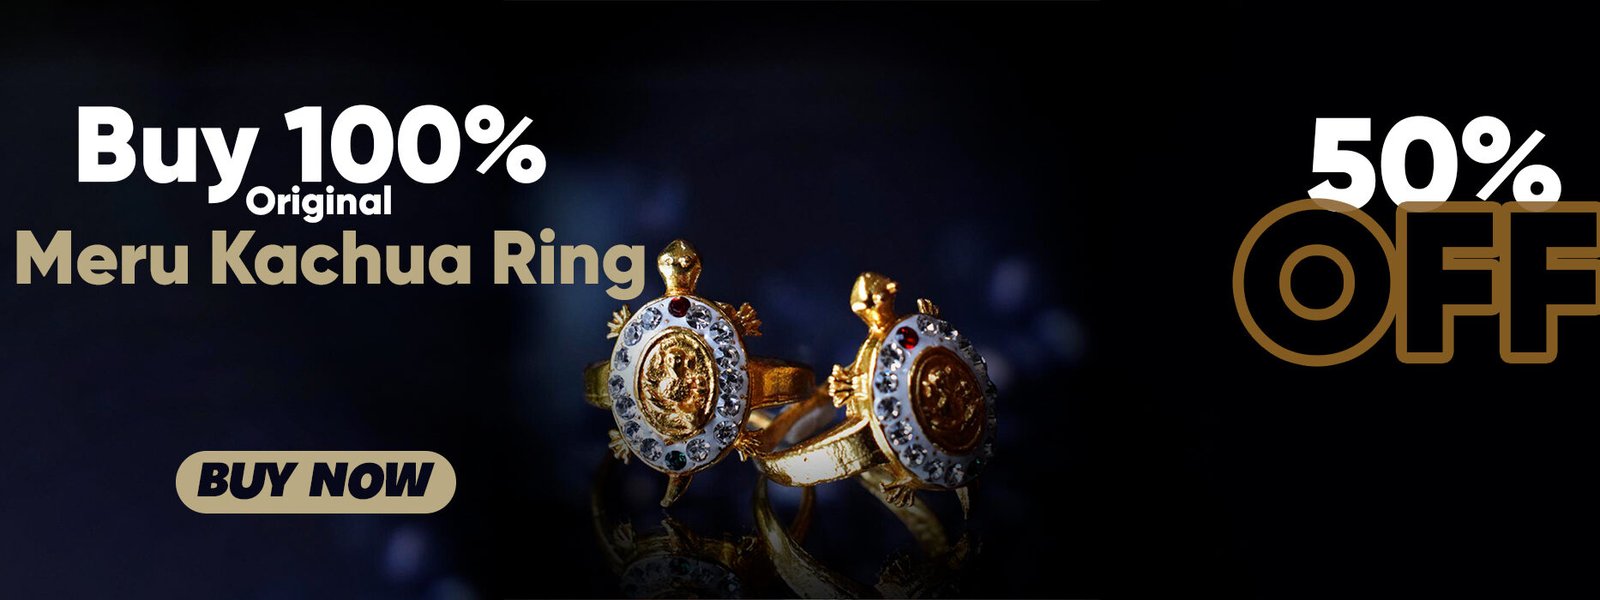 http://soleyogi.com/product/buy-original-meru-kachua-ring-online/